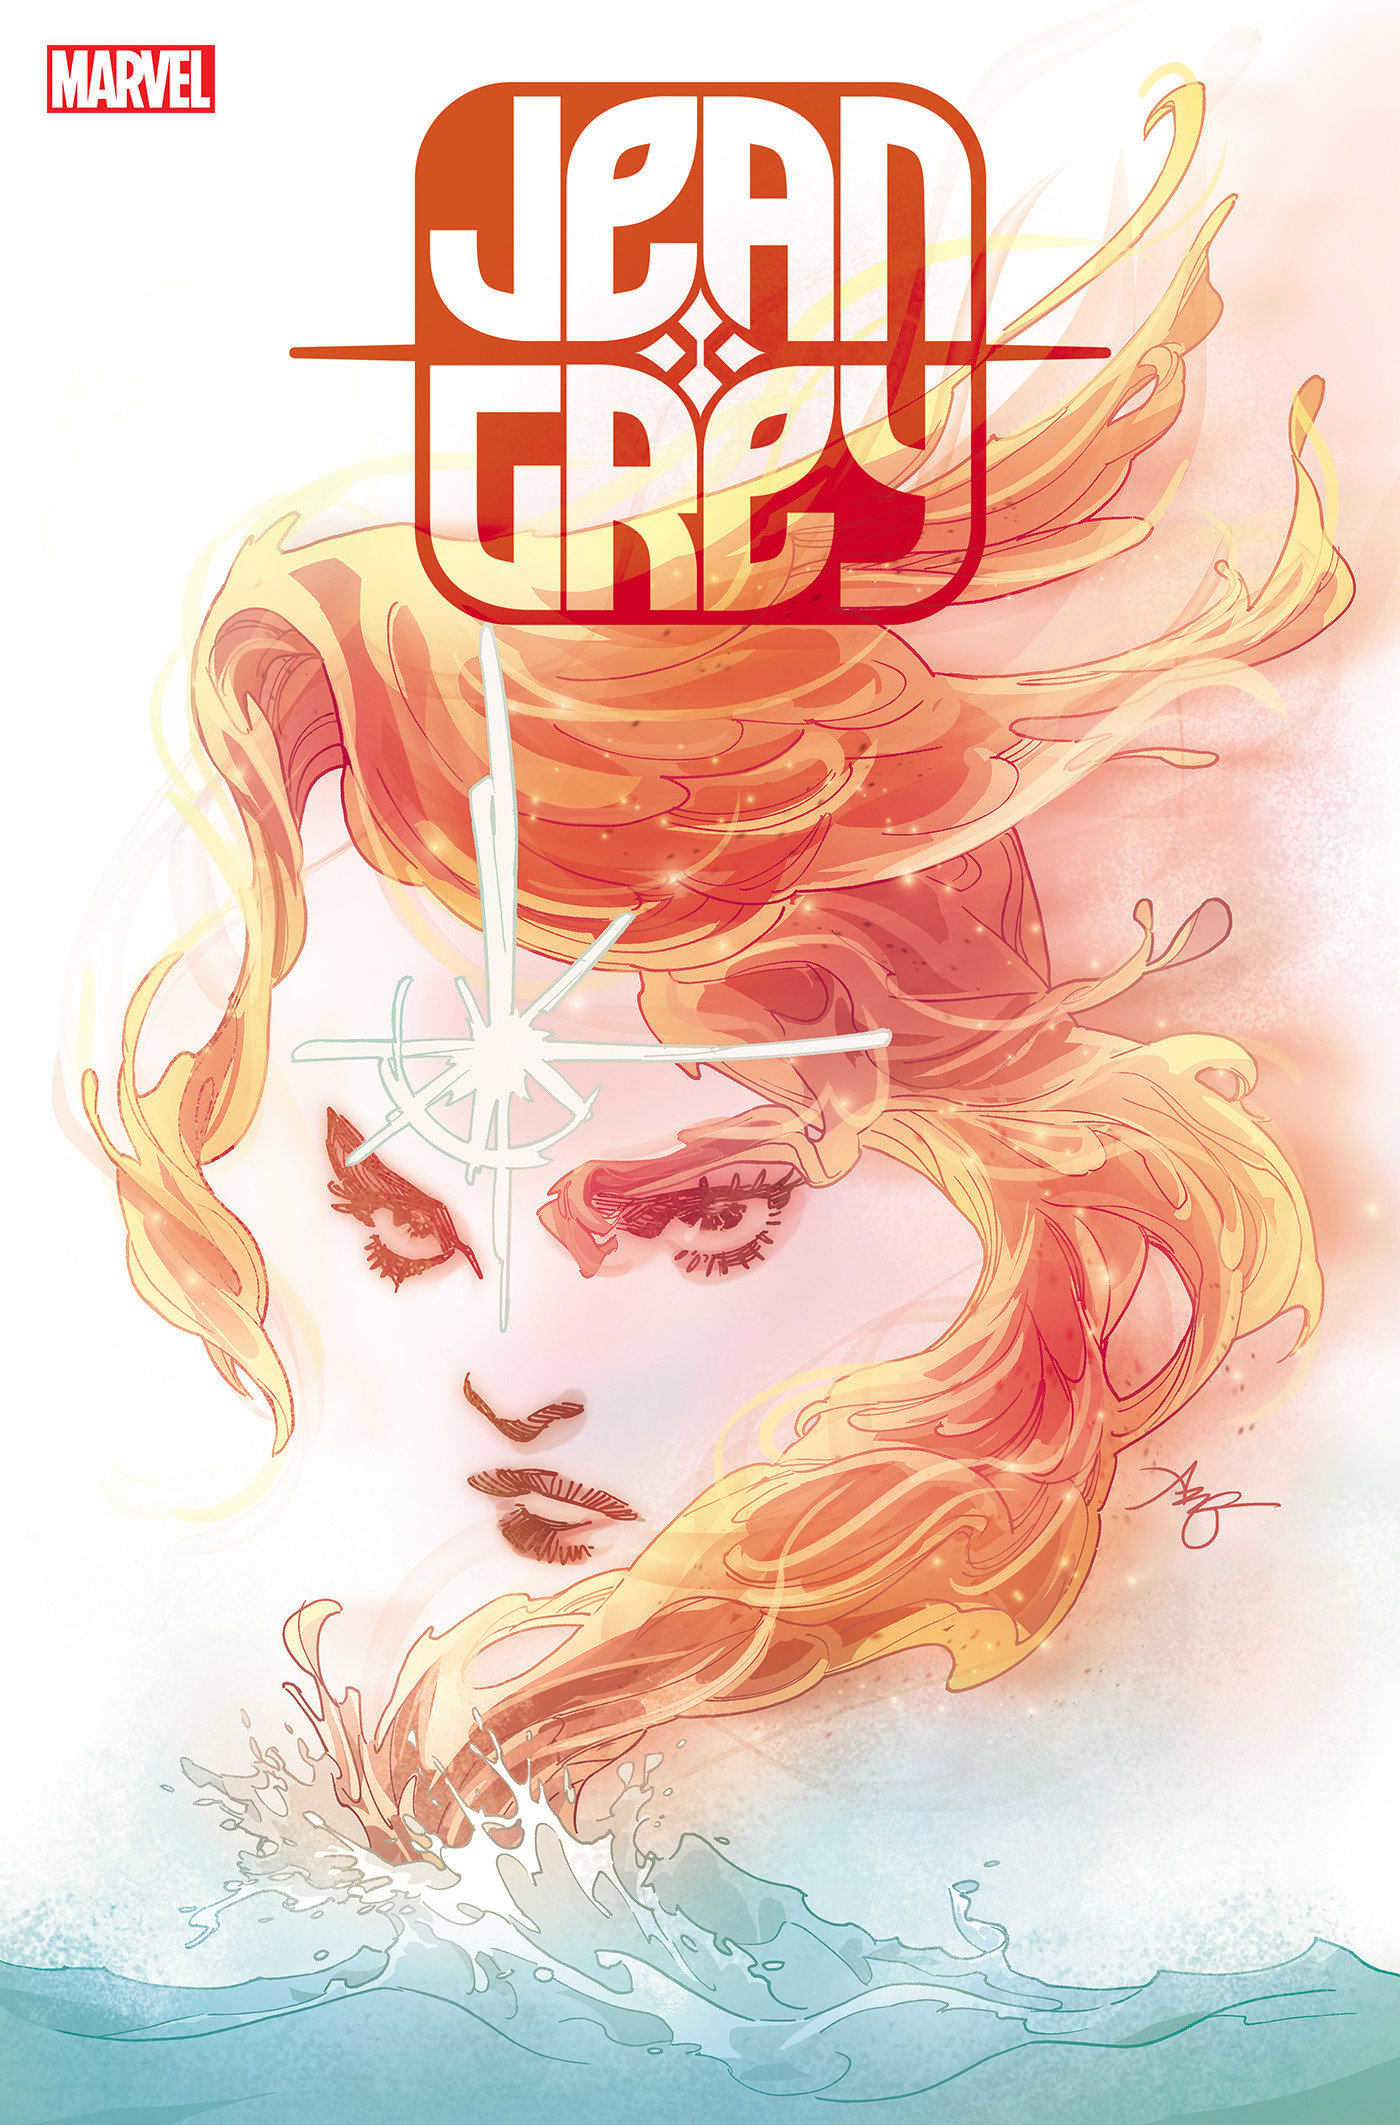 Jean Grey #1 (Fall of the X-Men)